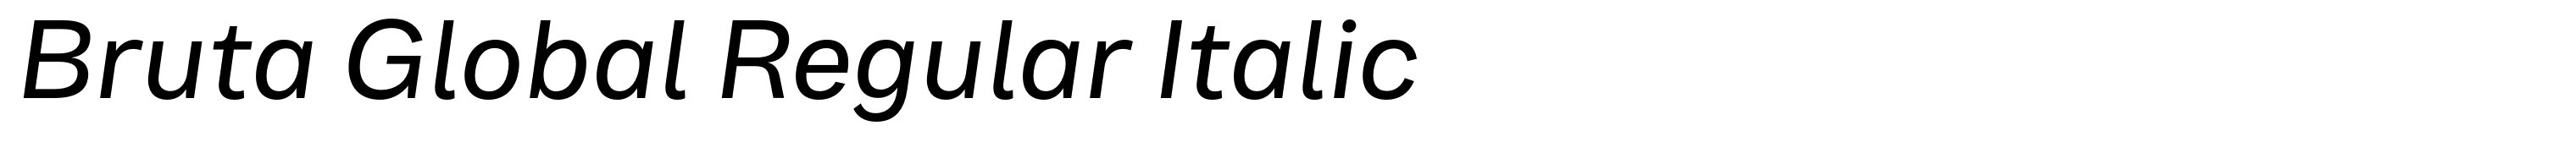 Bruta Global Regular Italic